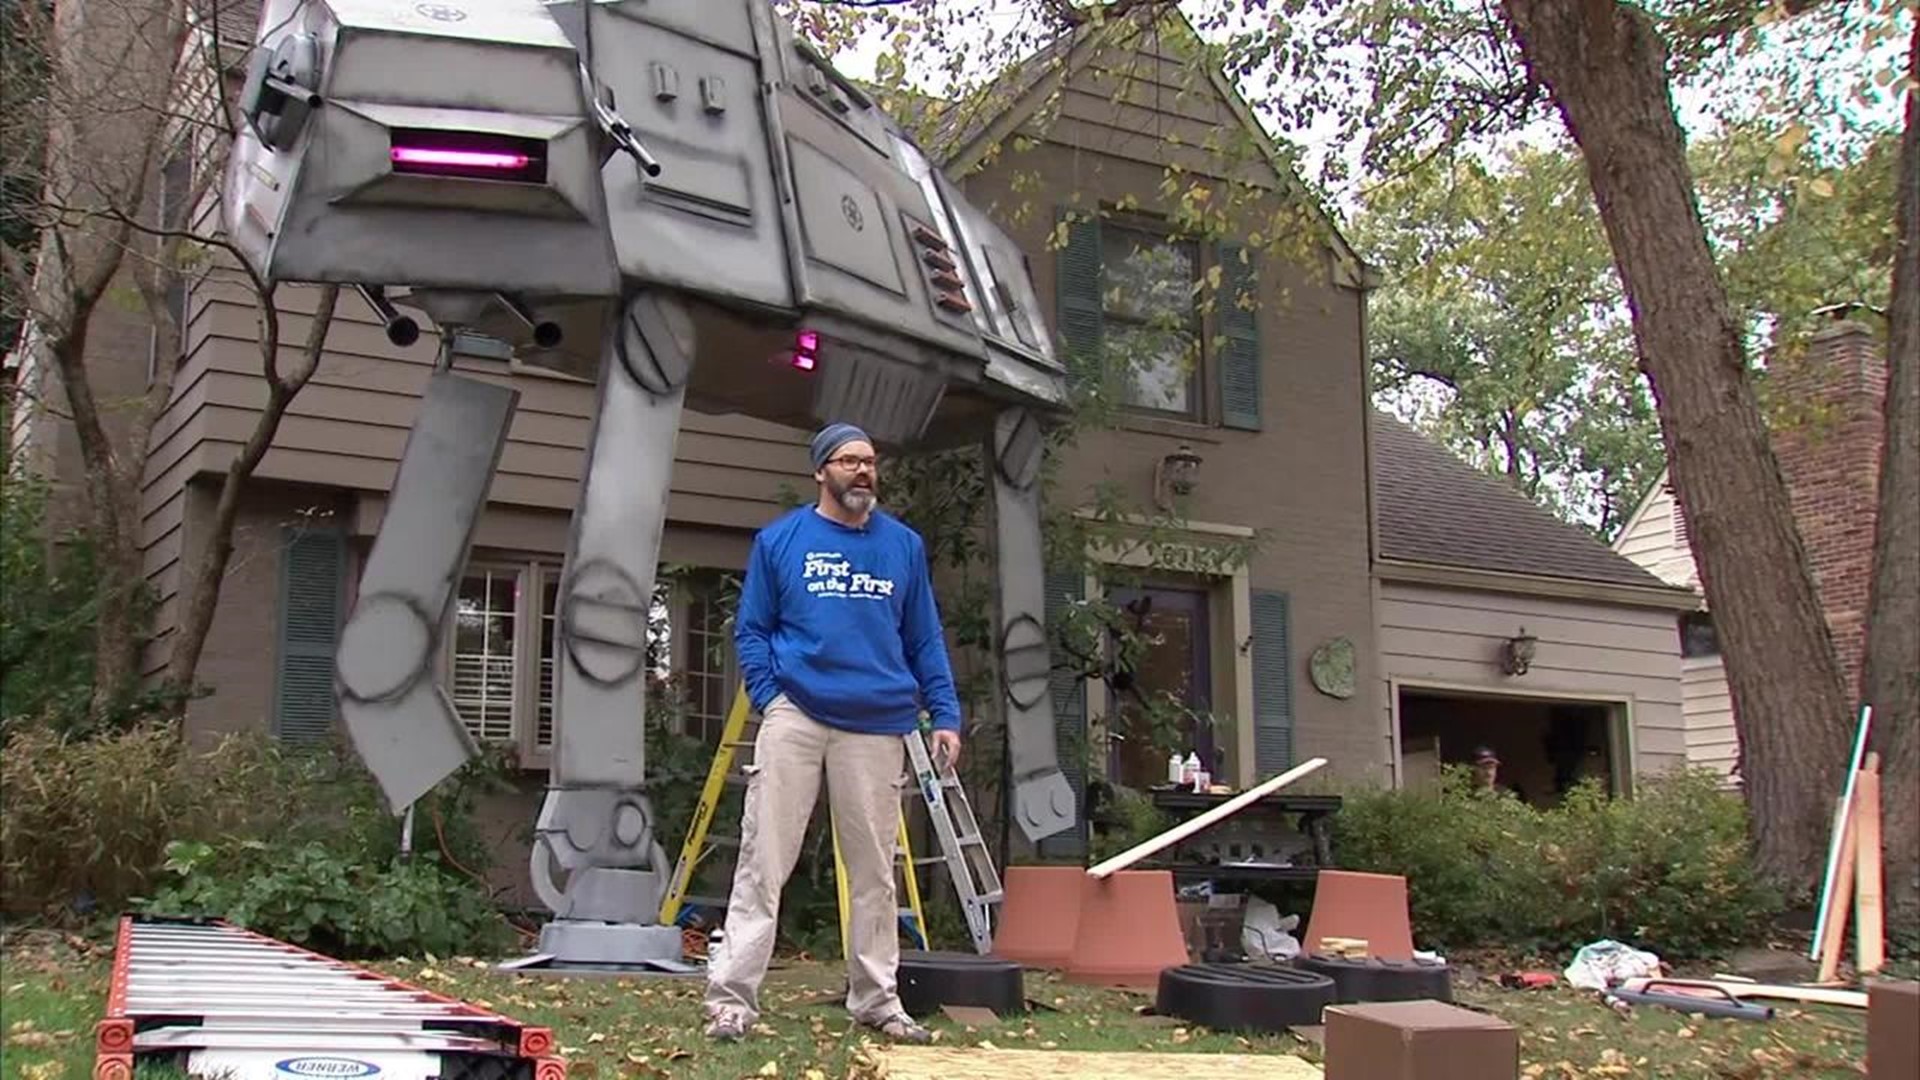 Columbus man creates 'Star Wars' scene for Halloween yard decoration